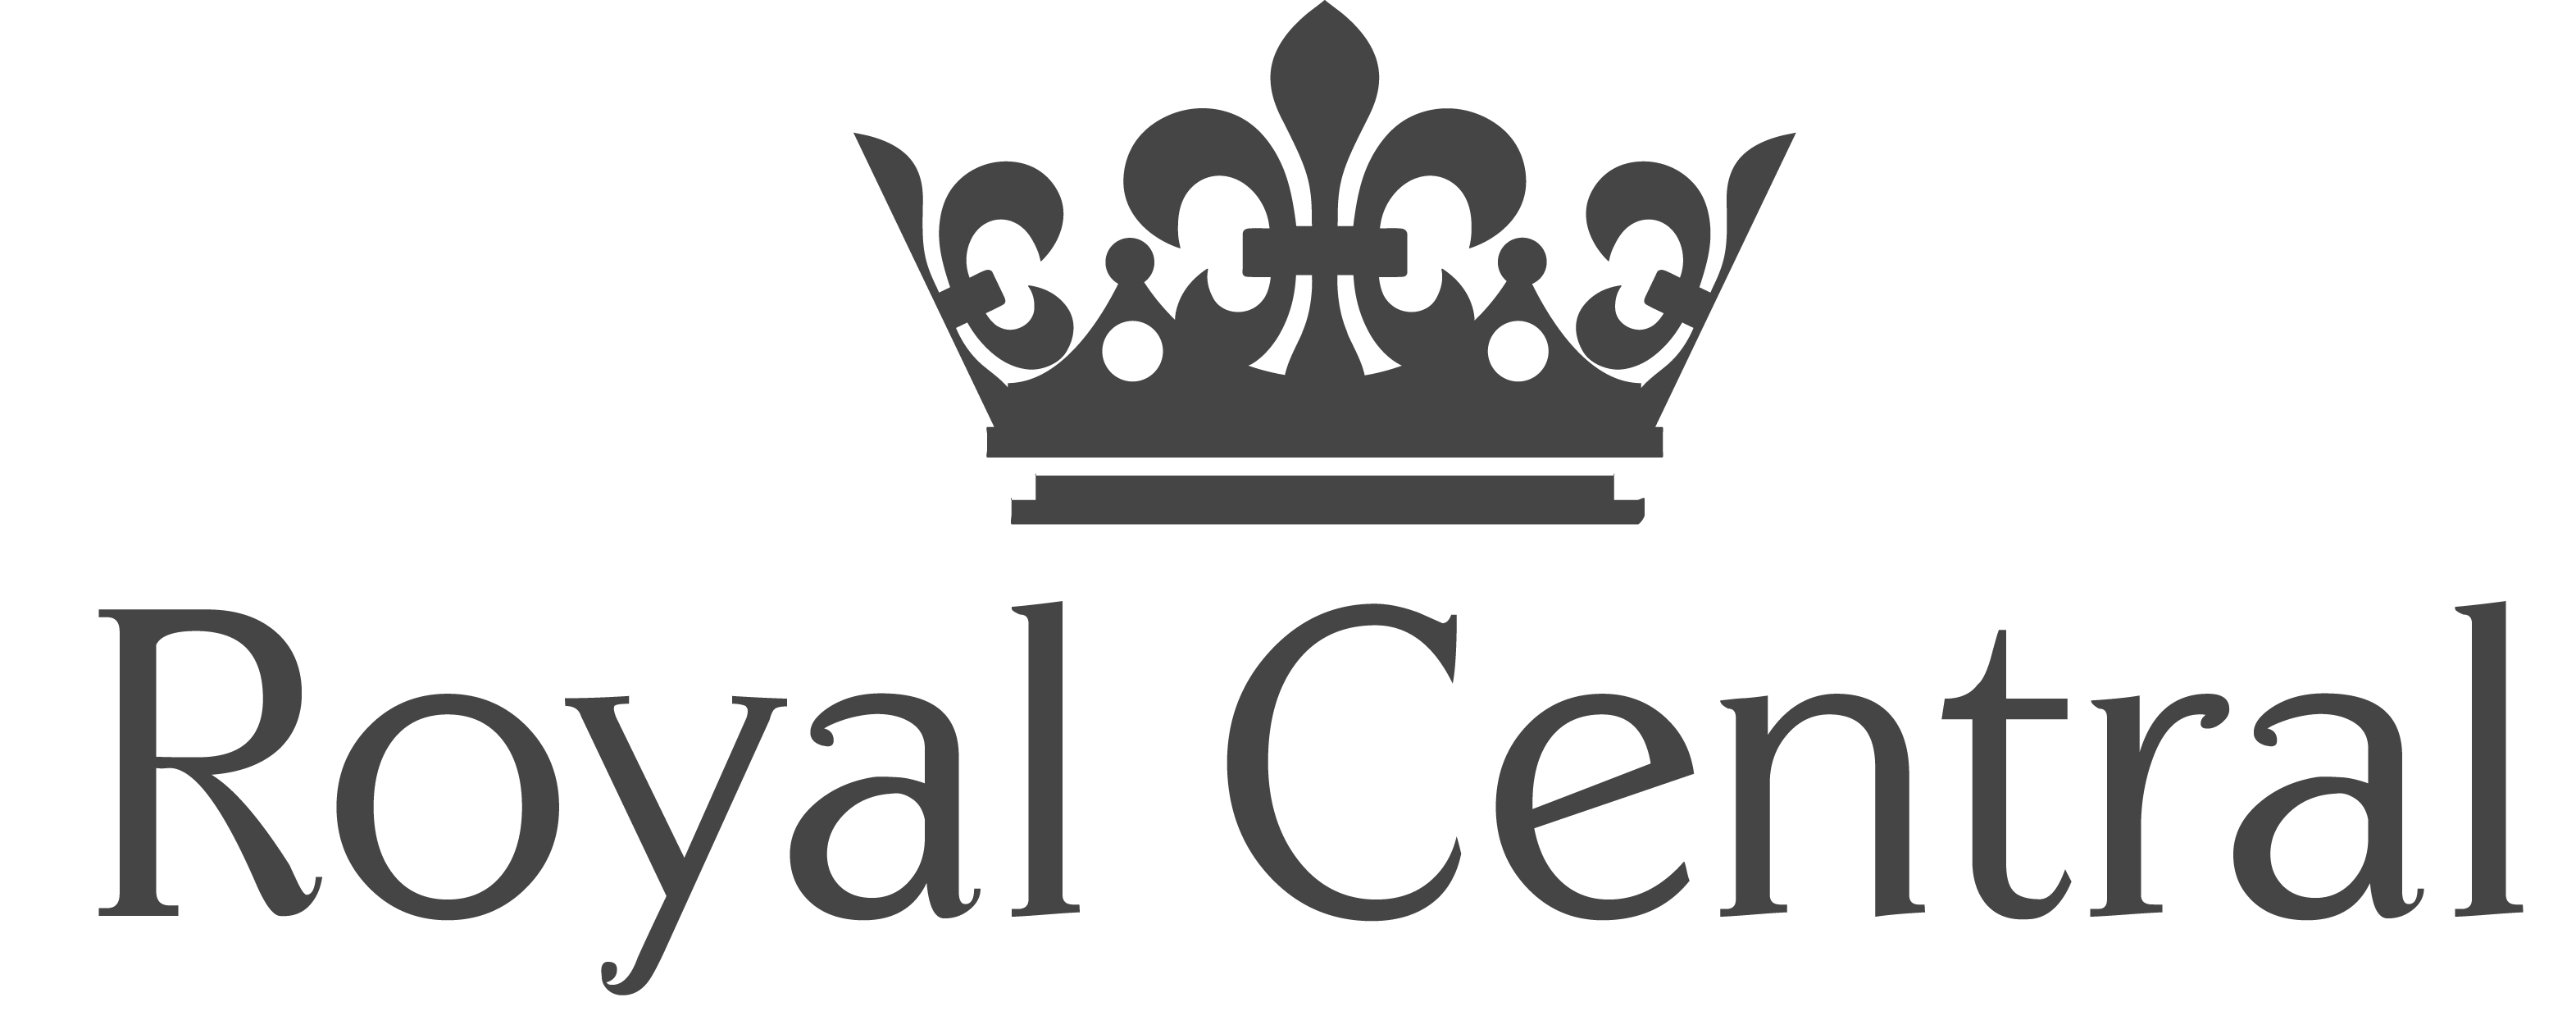 Royals Logo - Royal Central Logo